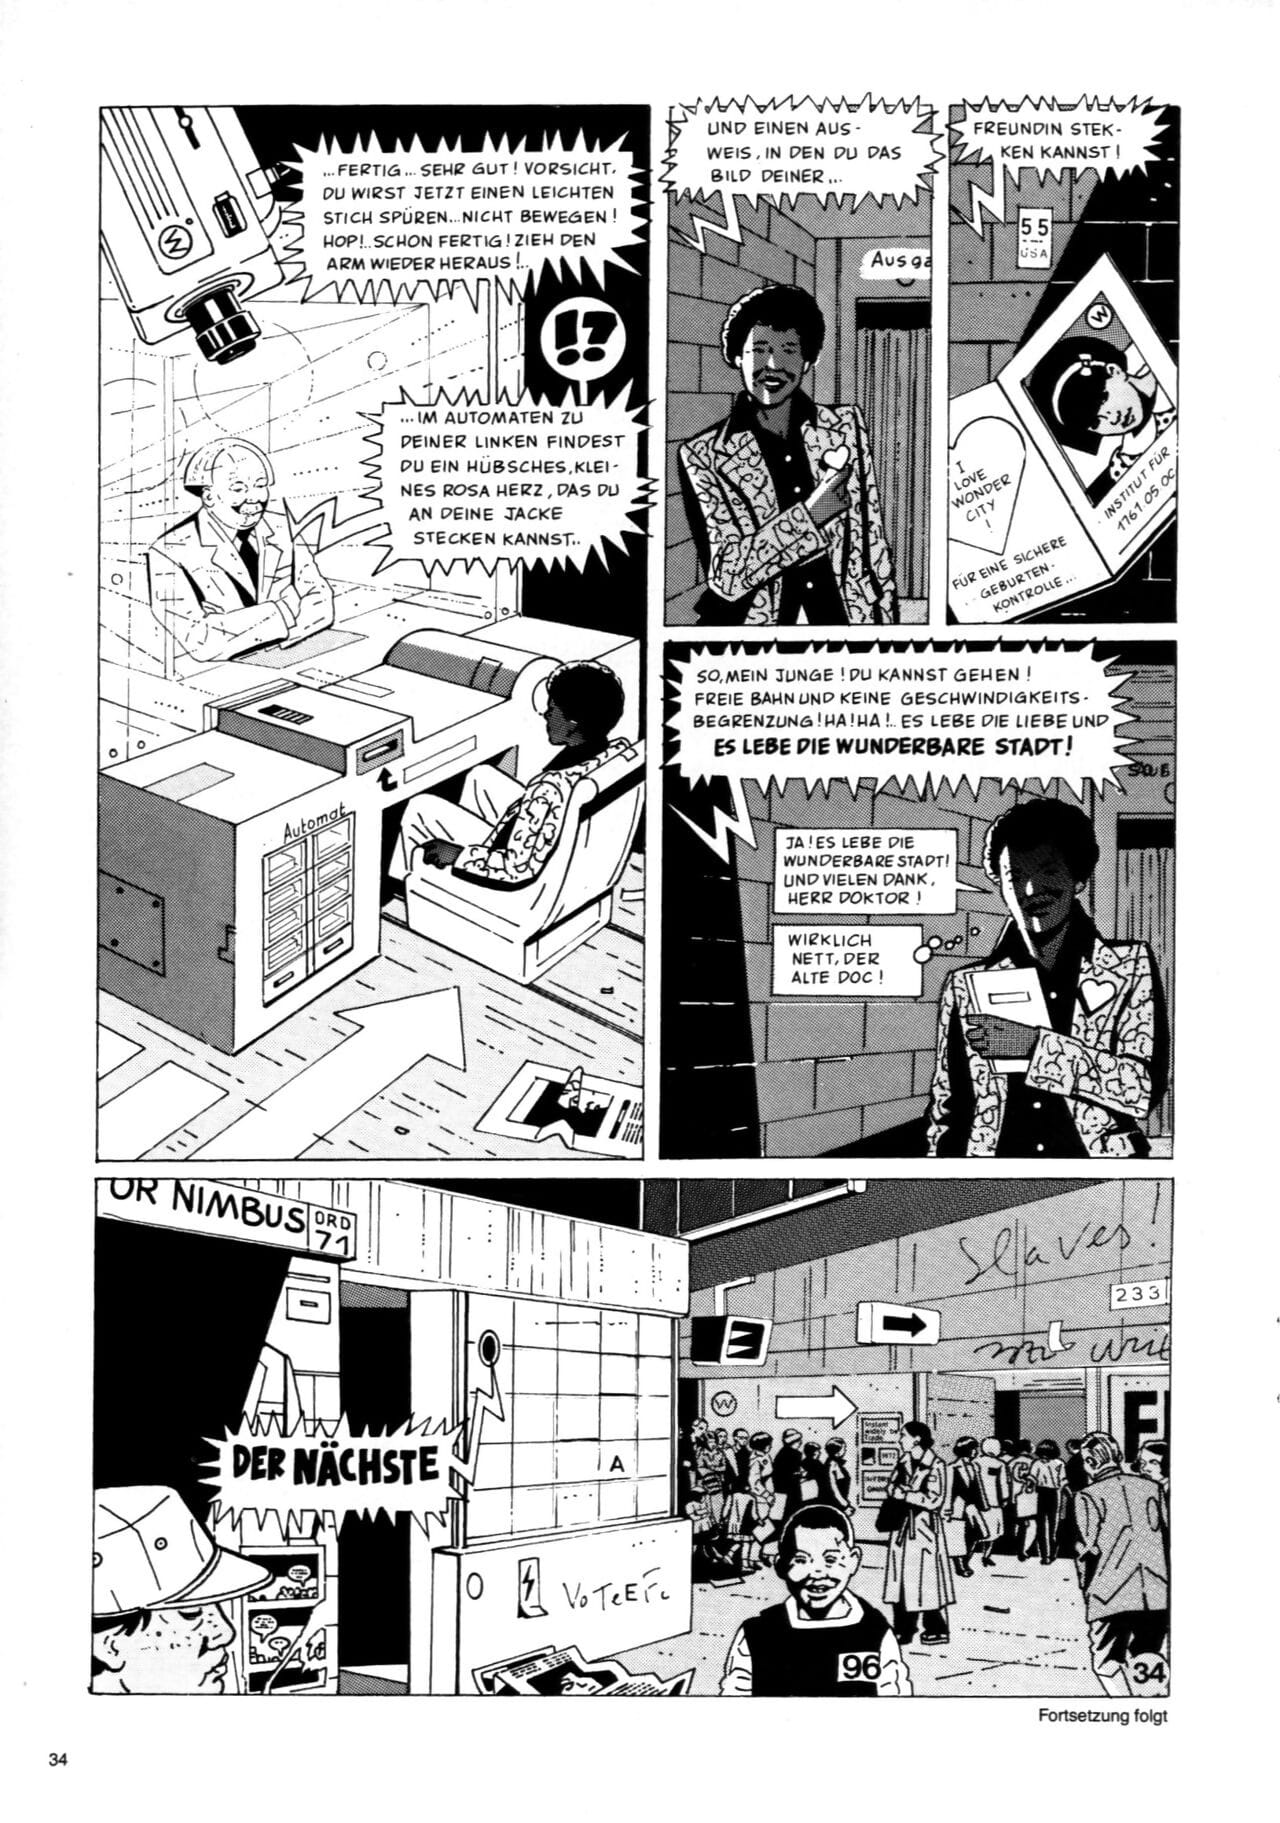 schwermetall #080 phần 2 page 1